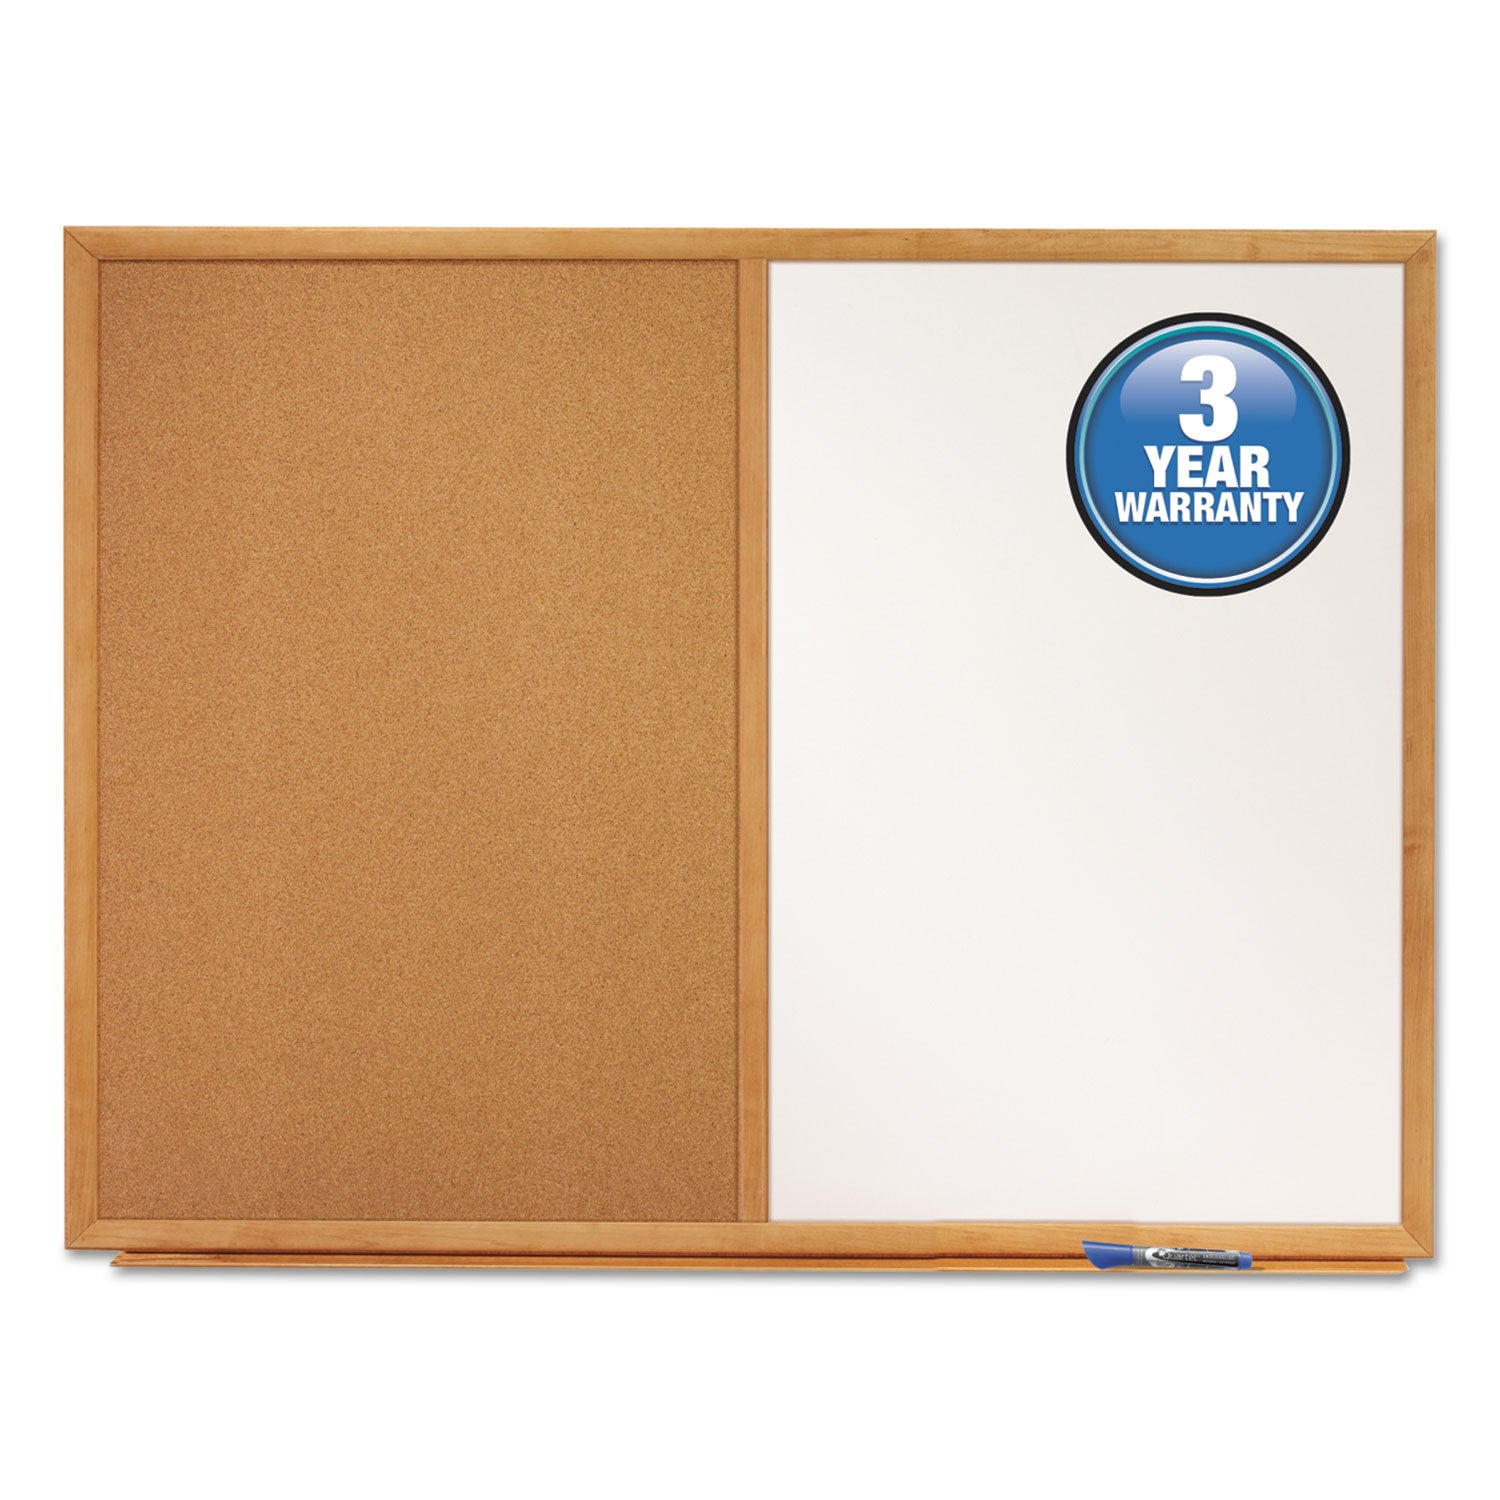 Bulletin/Dry-Erase Board, Melamine/Cork, 48 x 36, Brown/White Surface, Oak Finish Frame - 